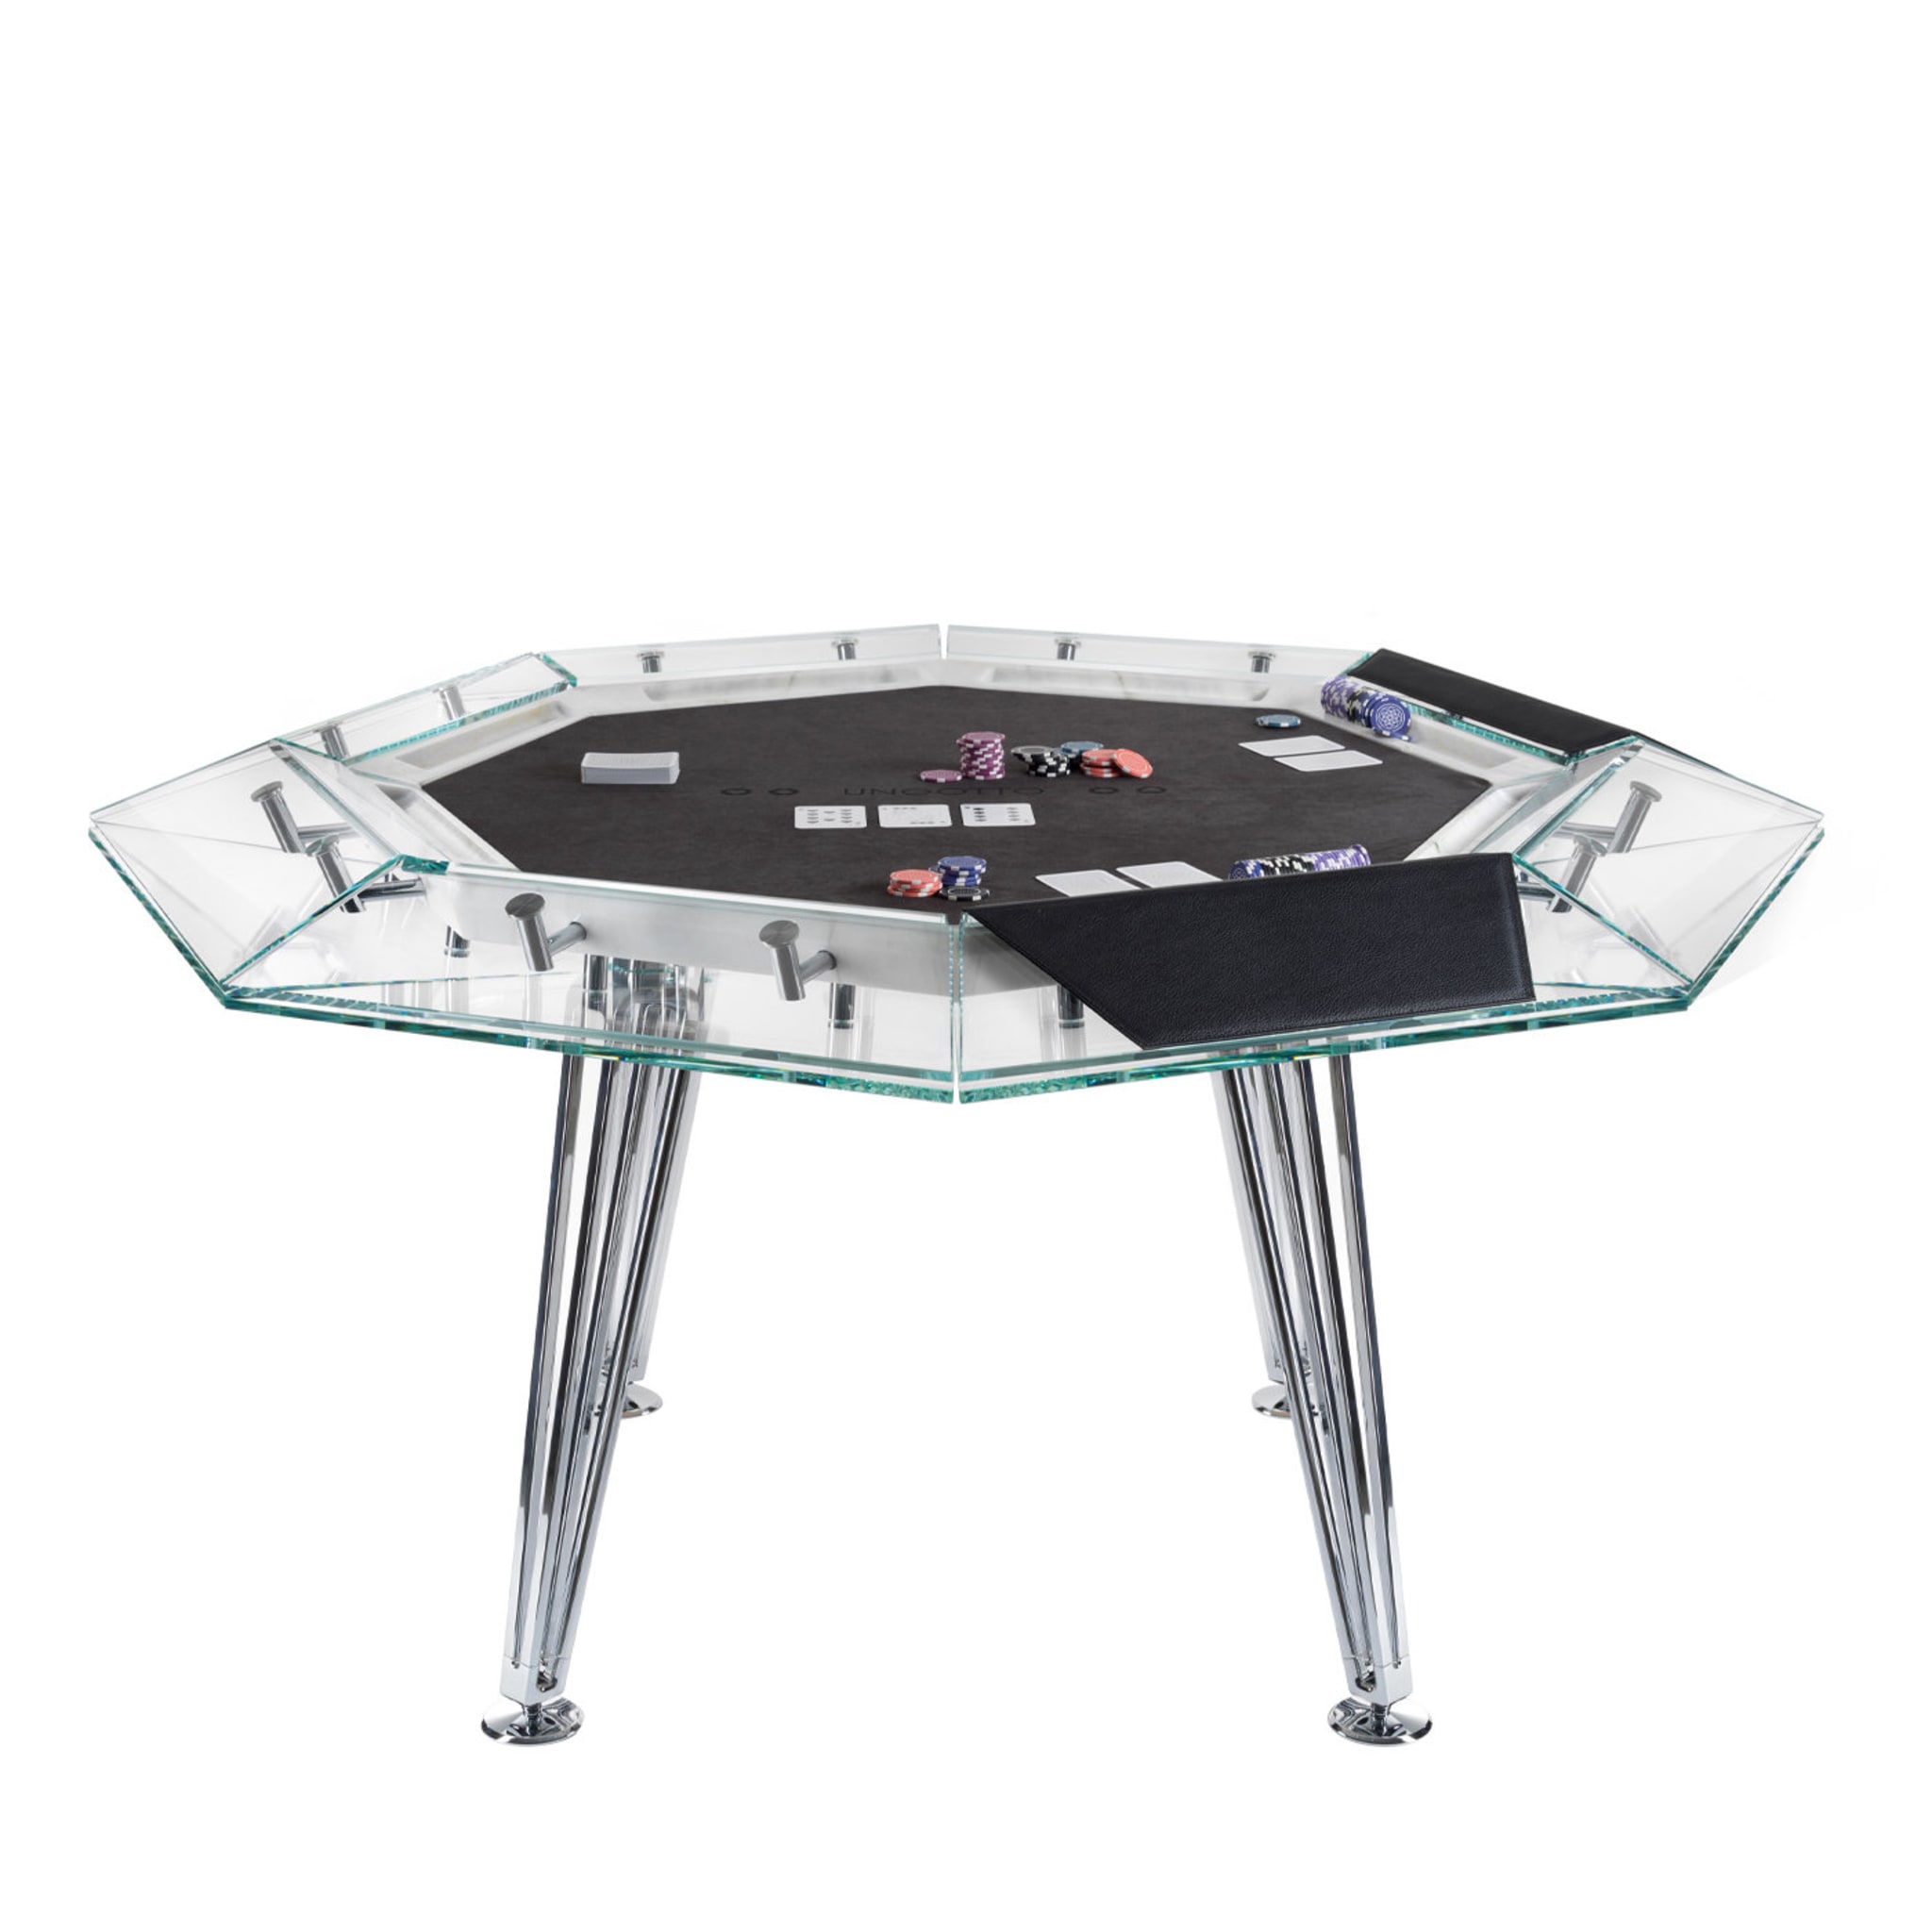 Table de poker 8 joueurs Unootto Marble Edition - Vue principale